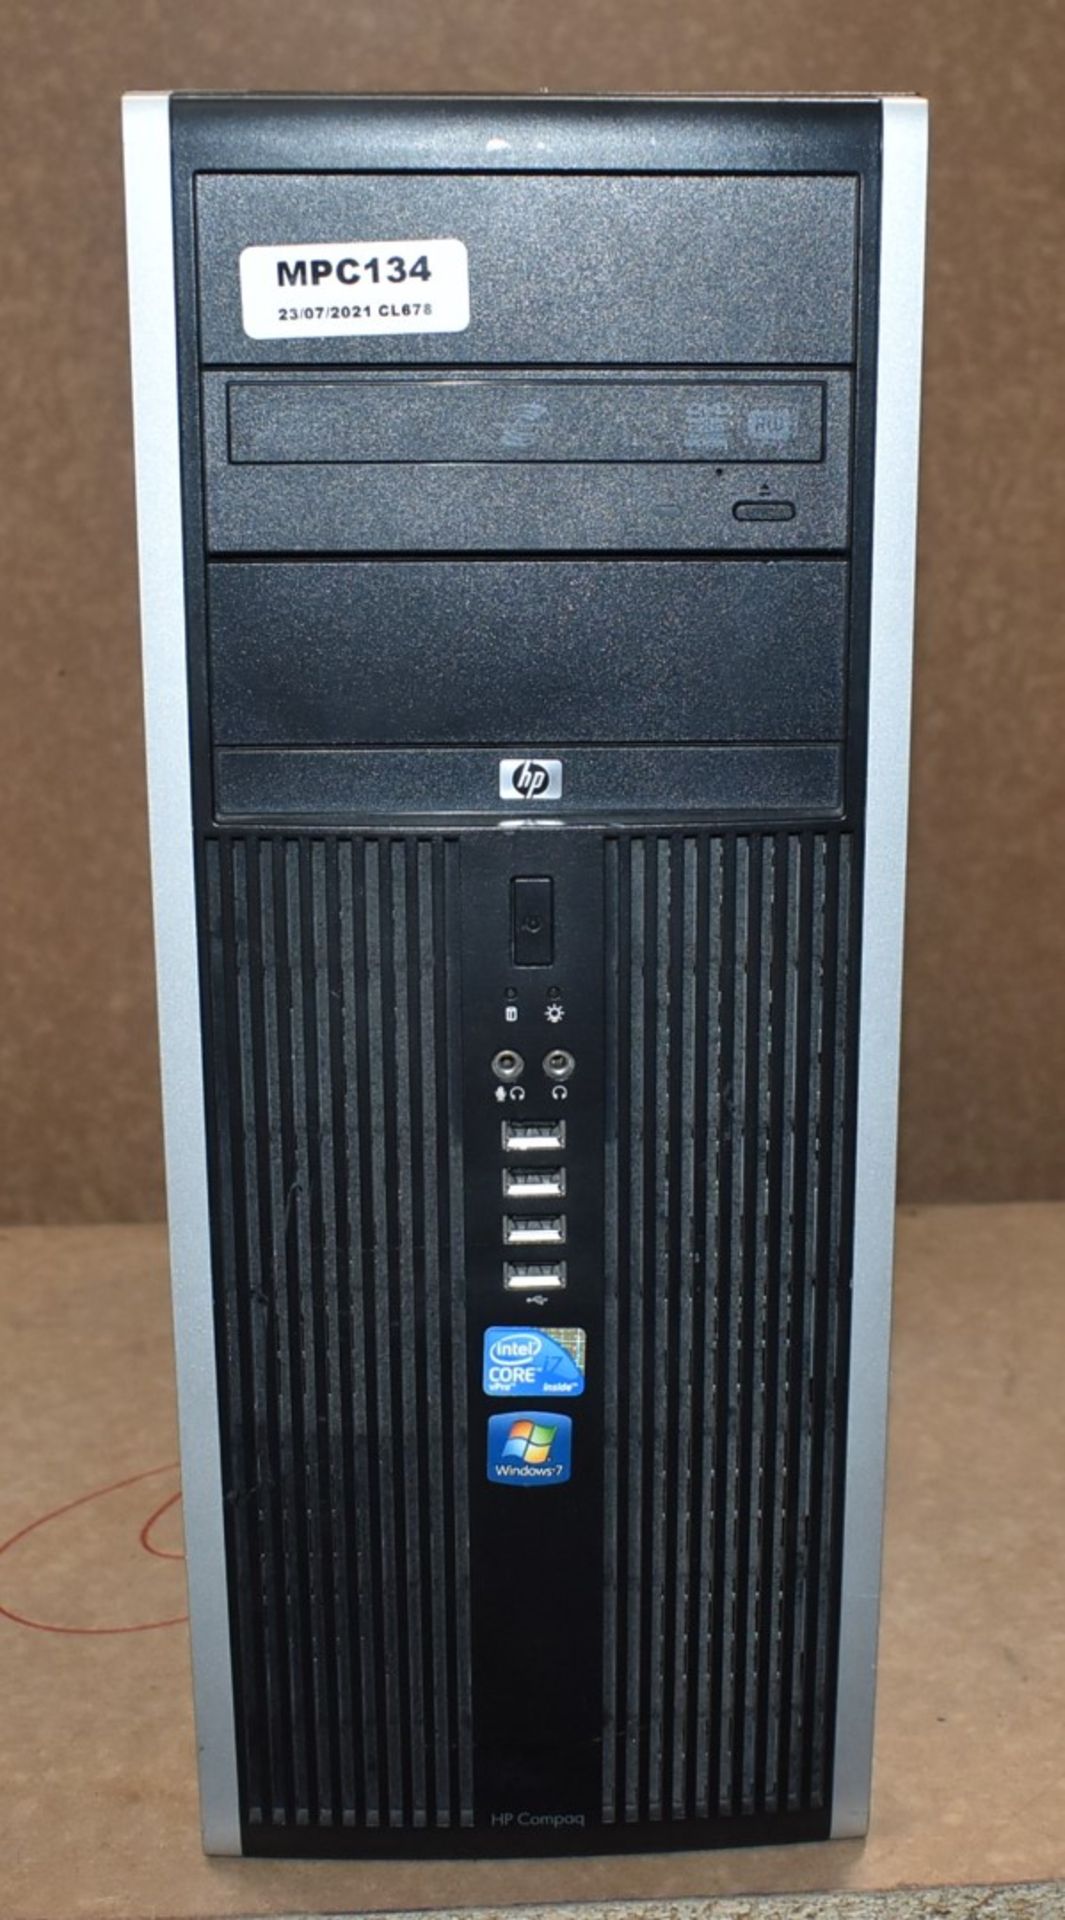 1 x HP Compaq 8100 Elite Mini Tower Desktop PC - Features an Intel i7 Processor and 4gb Ram - Spares